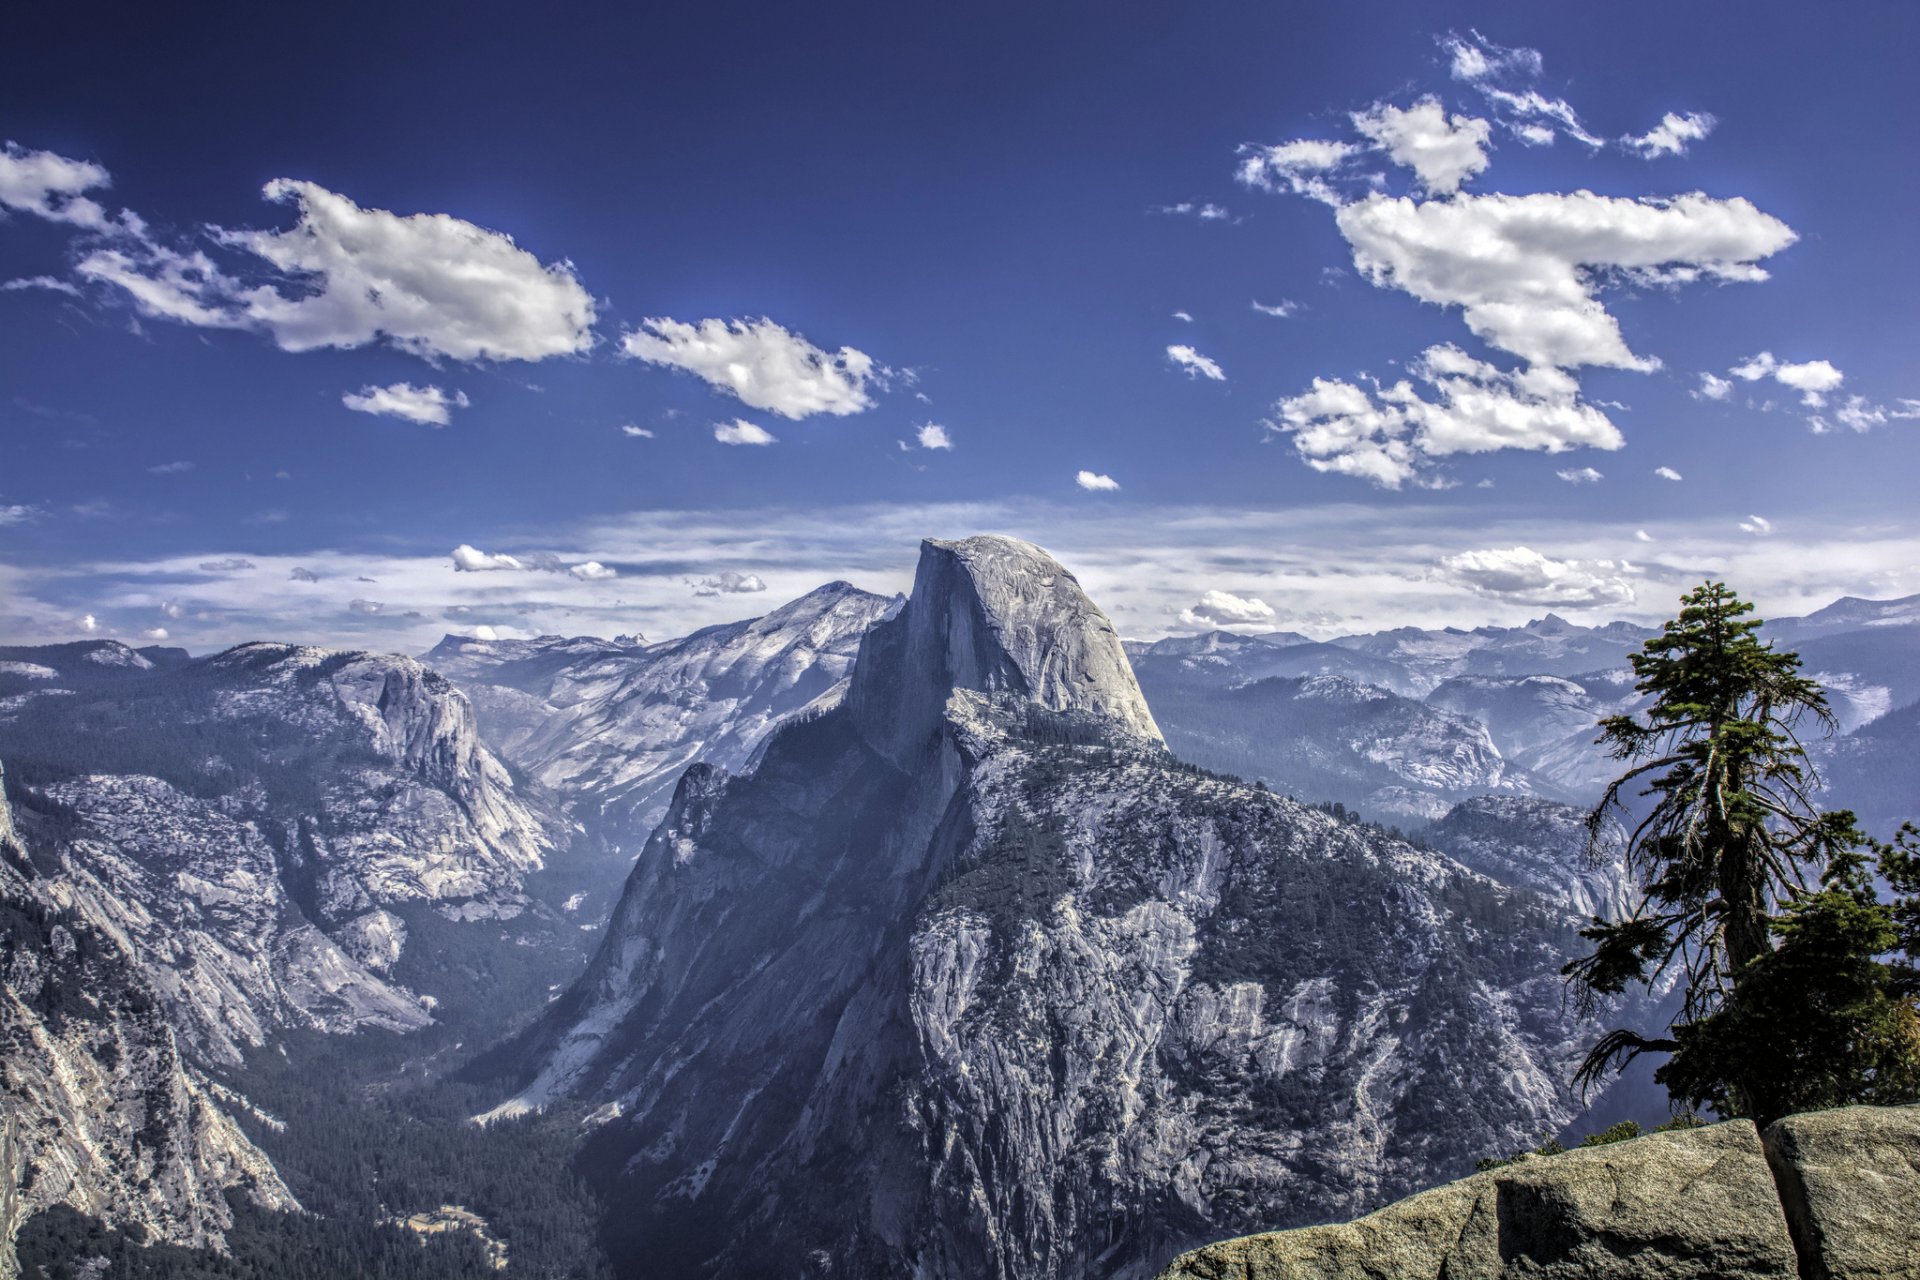 Hd Wallpaper Yosemite National Park California United States Mountain